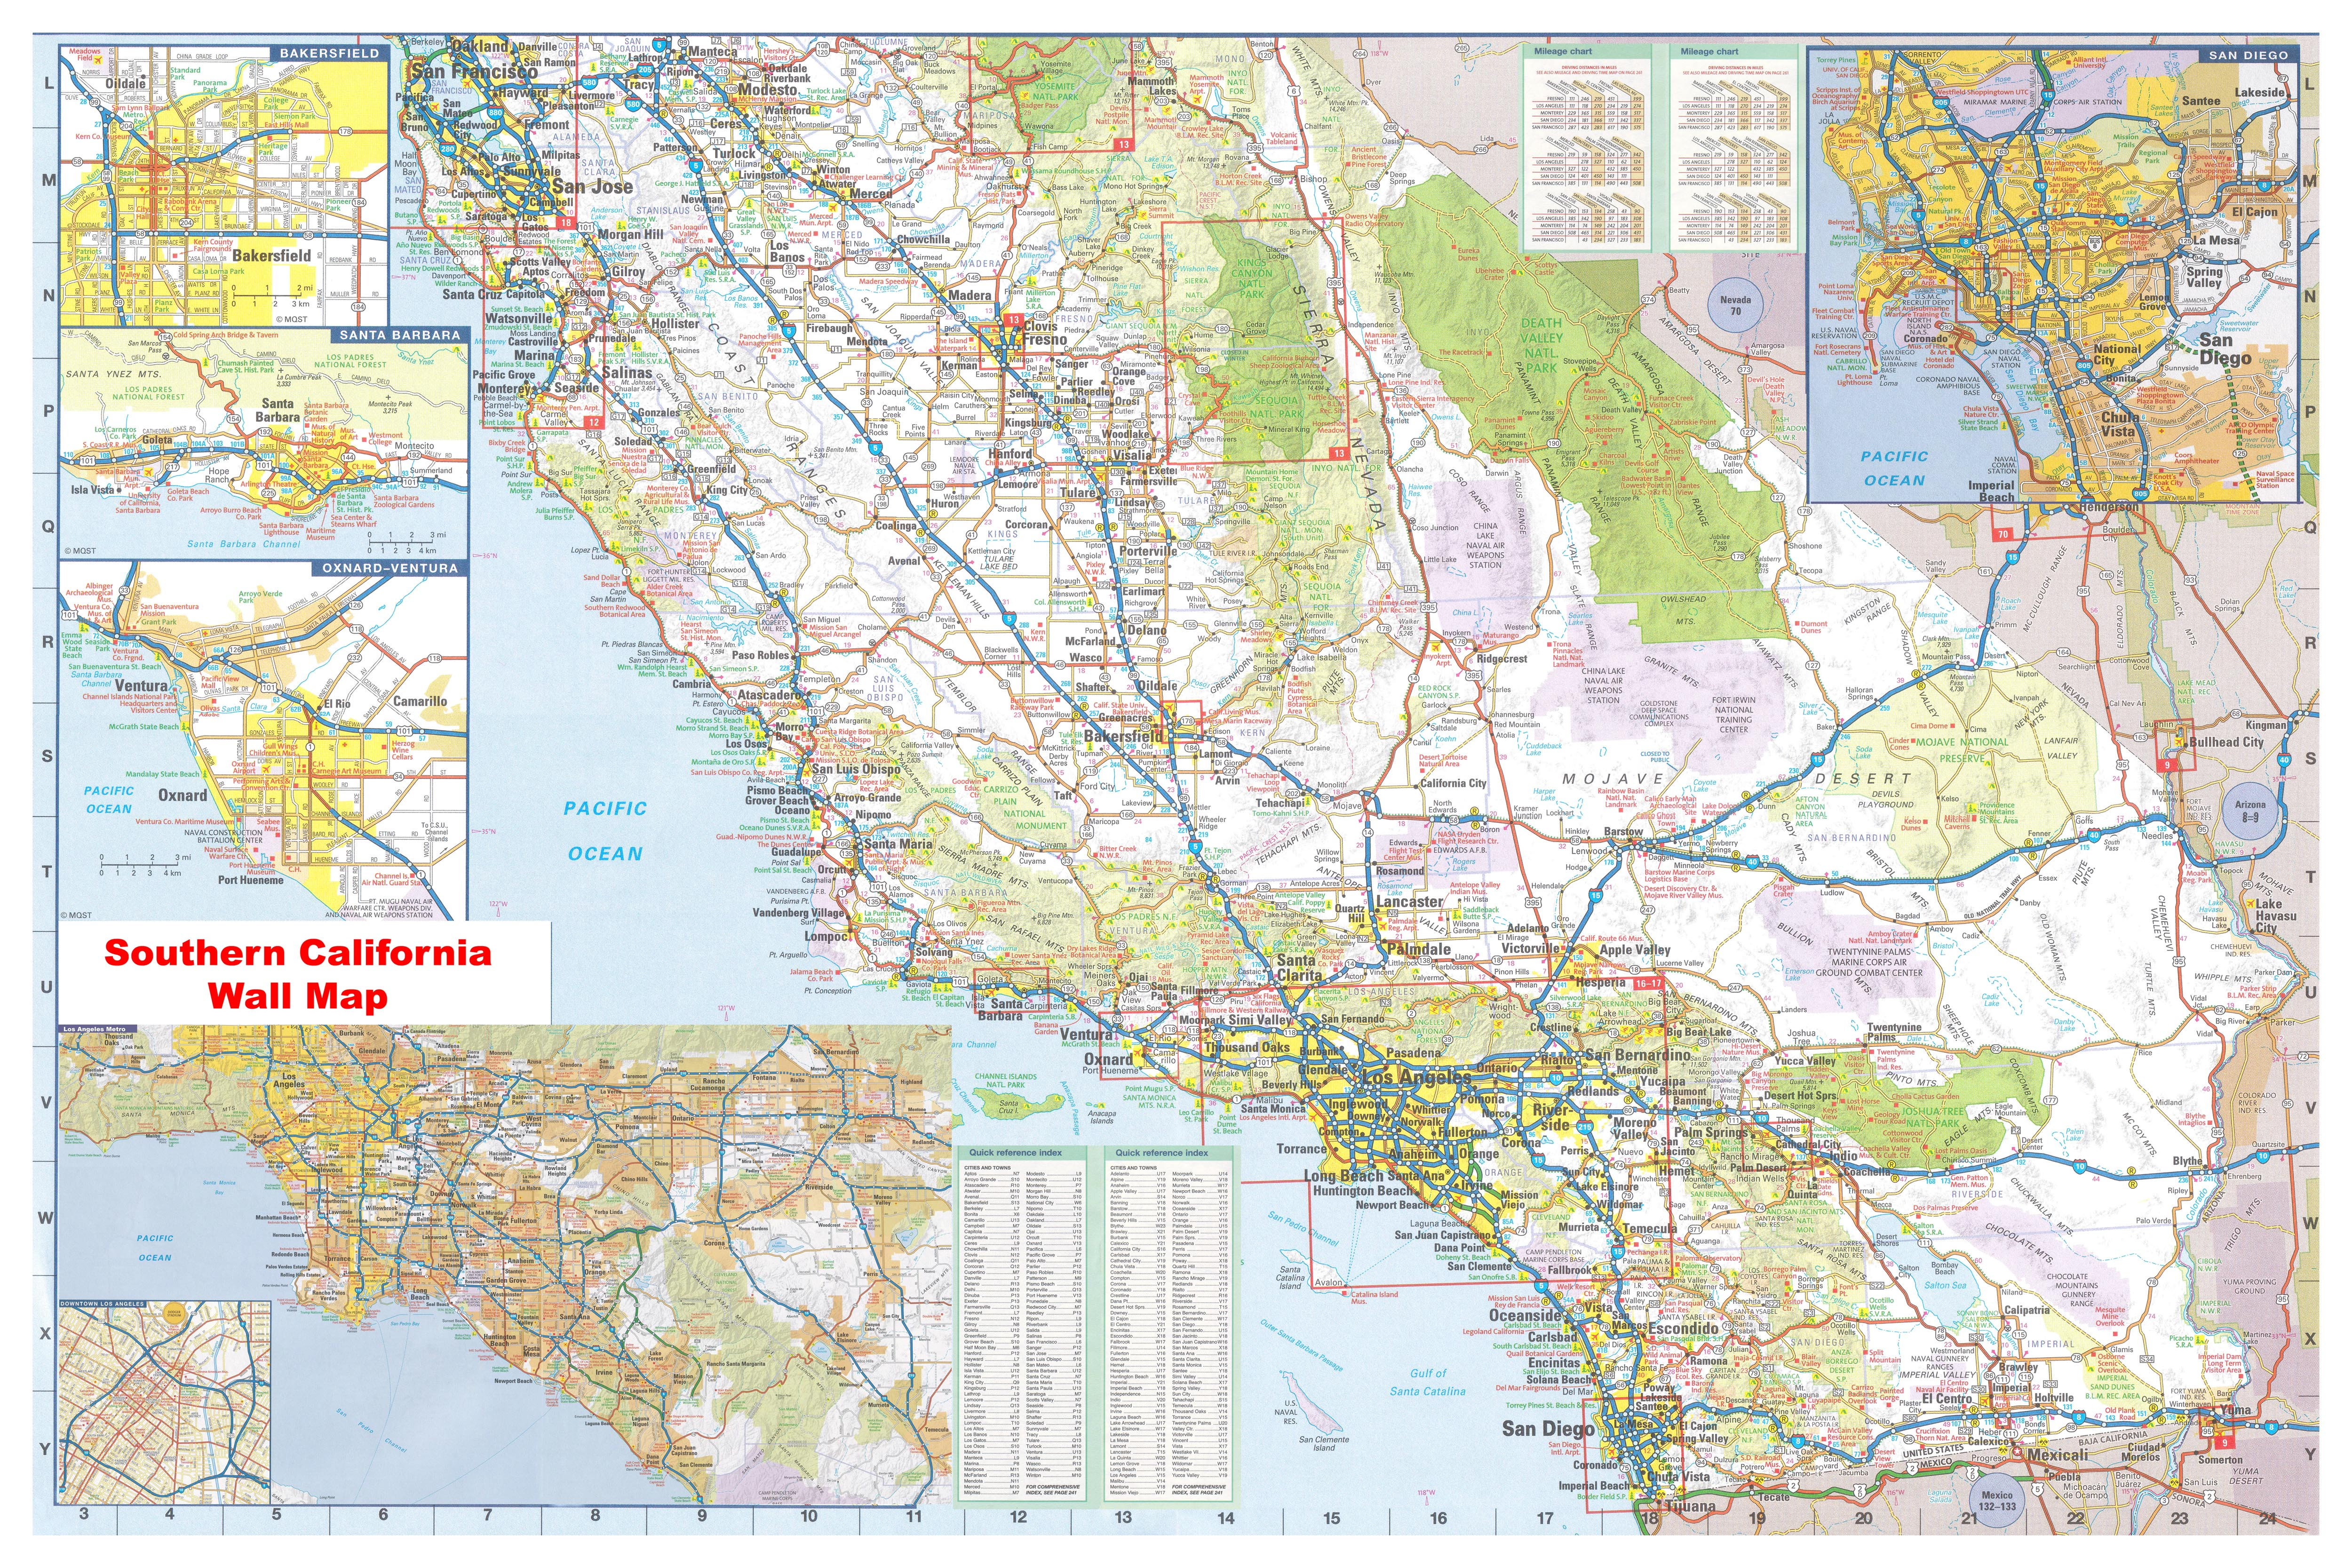 California Southern Wall Map Executive Commercial Edition - Southern California Wall Map